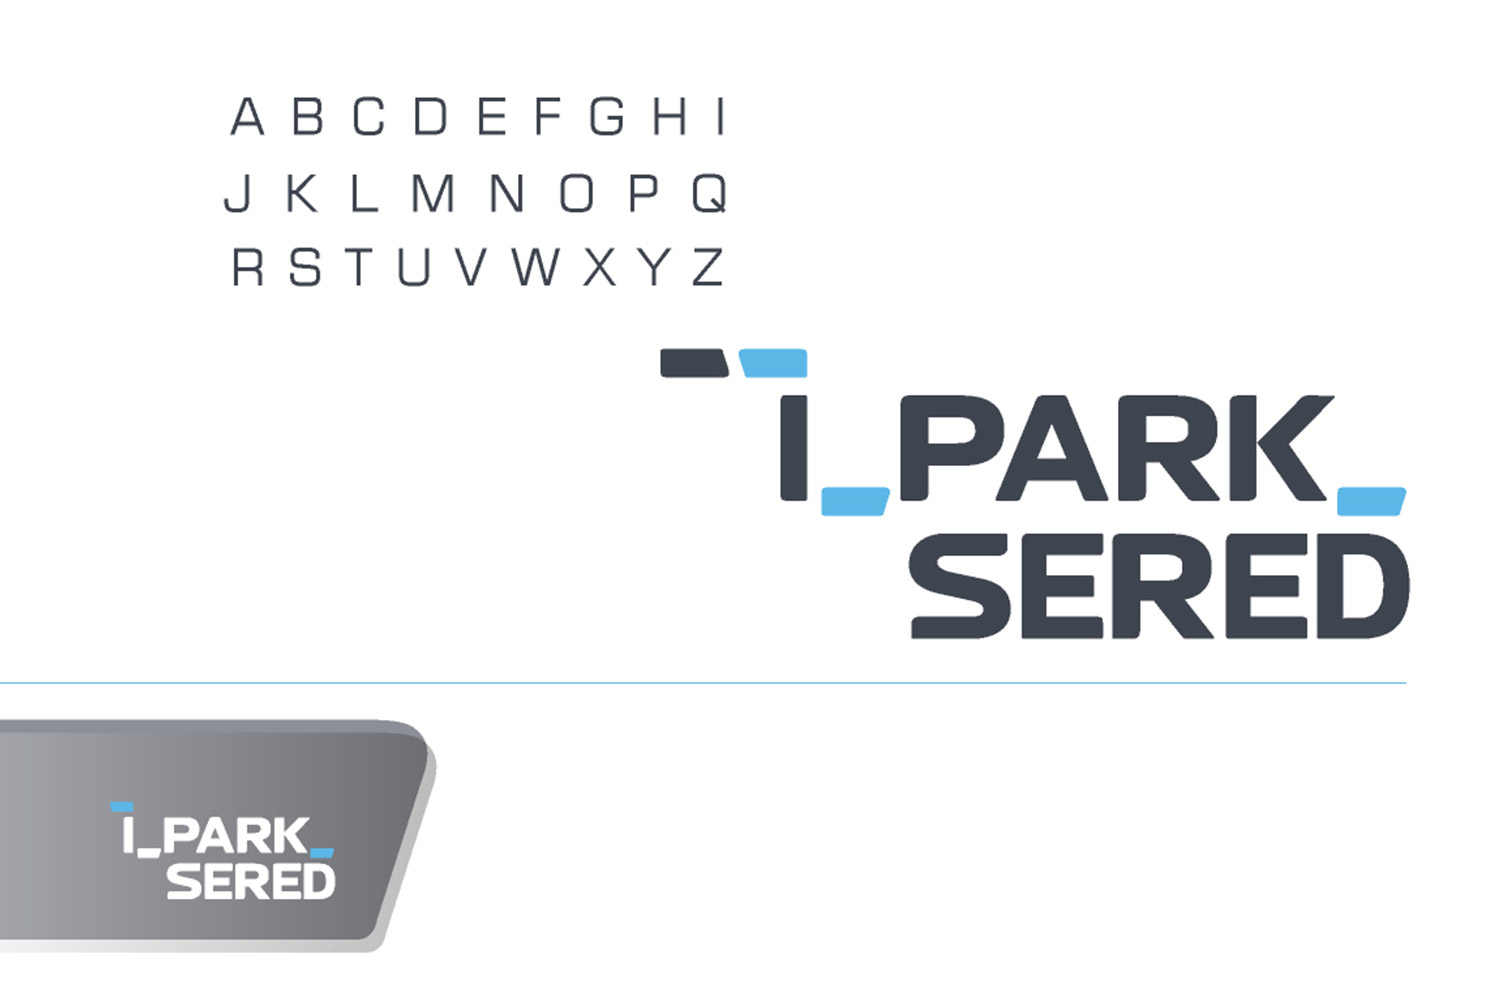 iPark Sered, Corporate Identity image